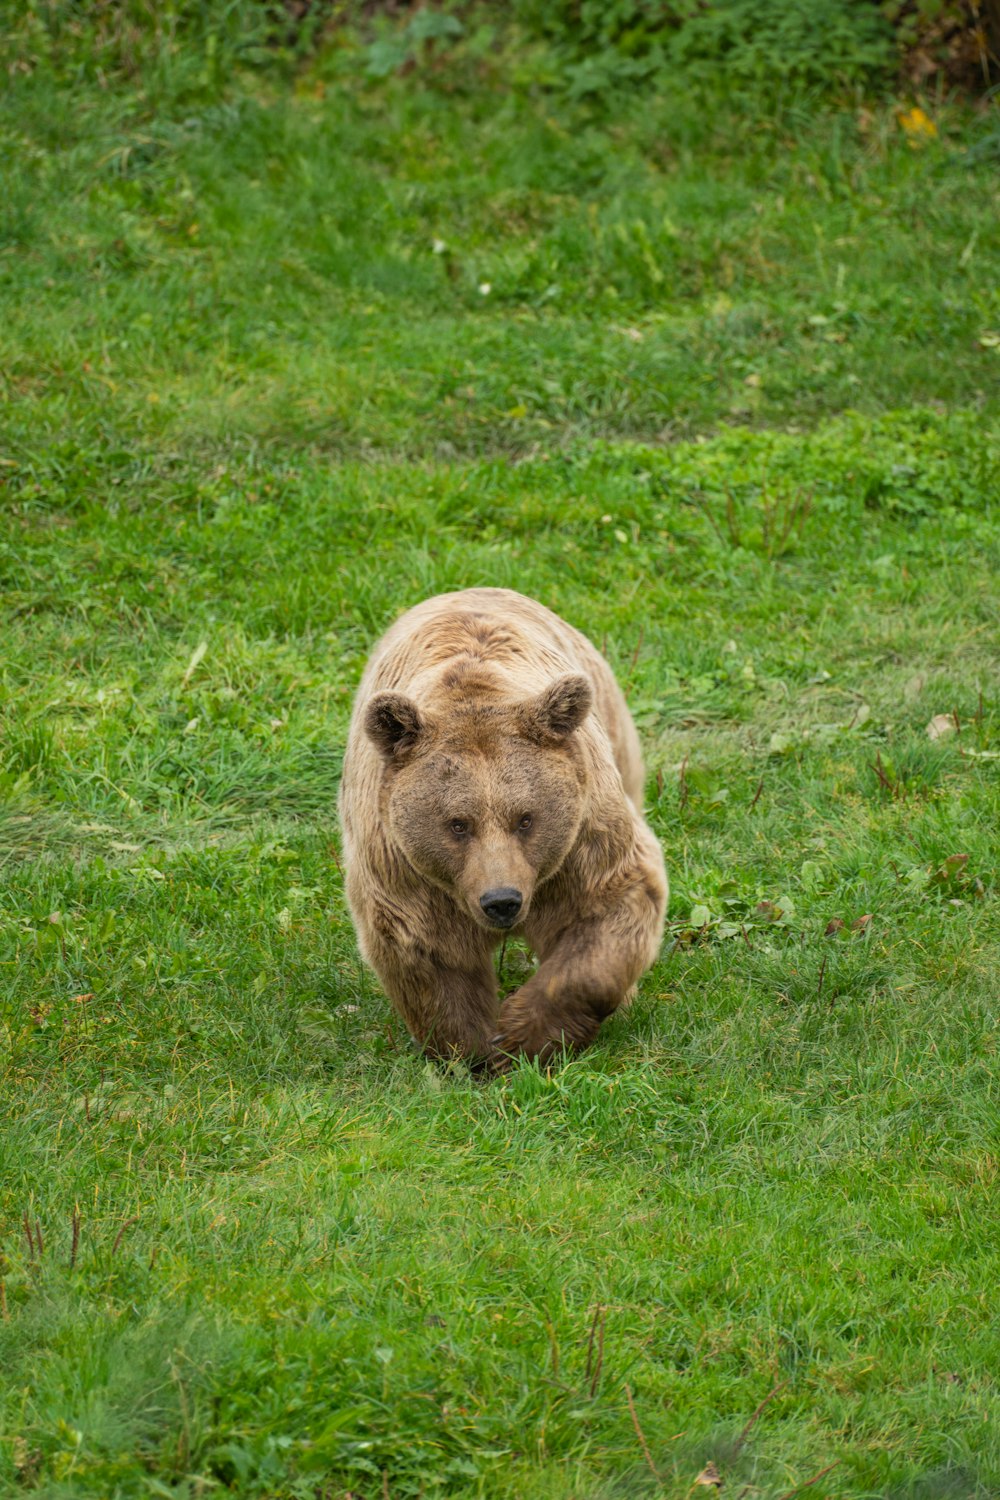 a brown bear walking across a lush green field